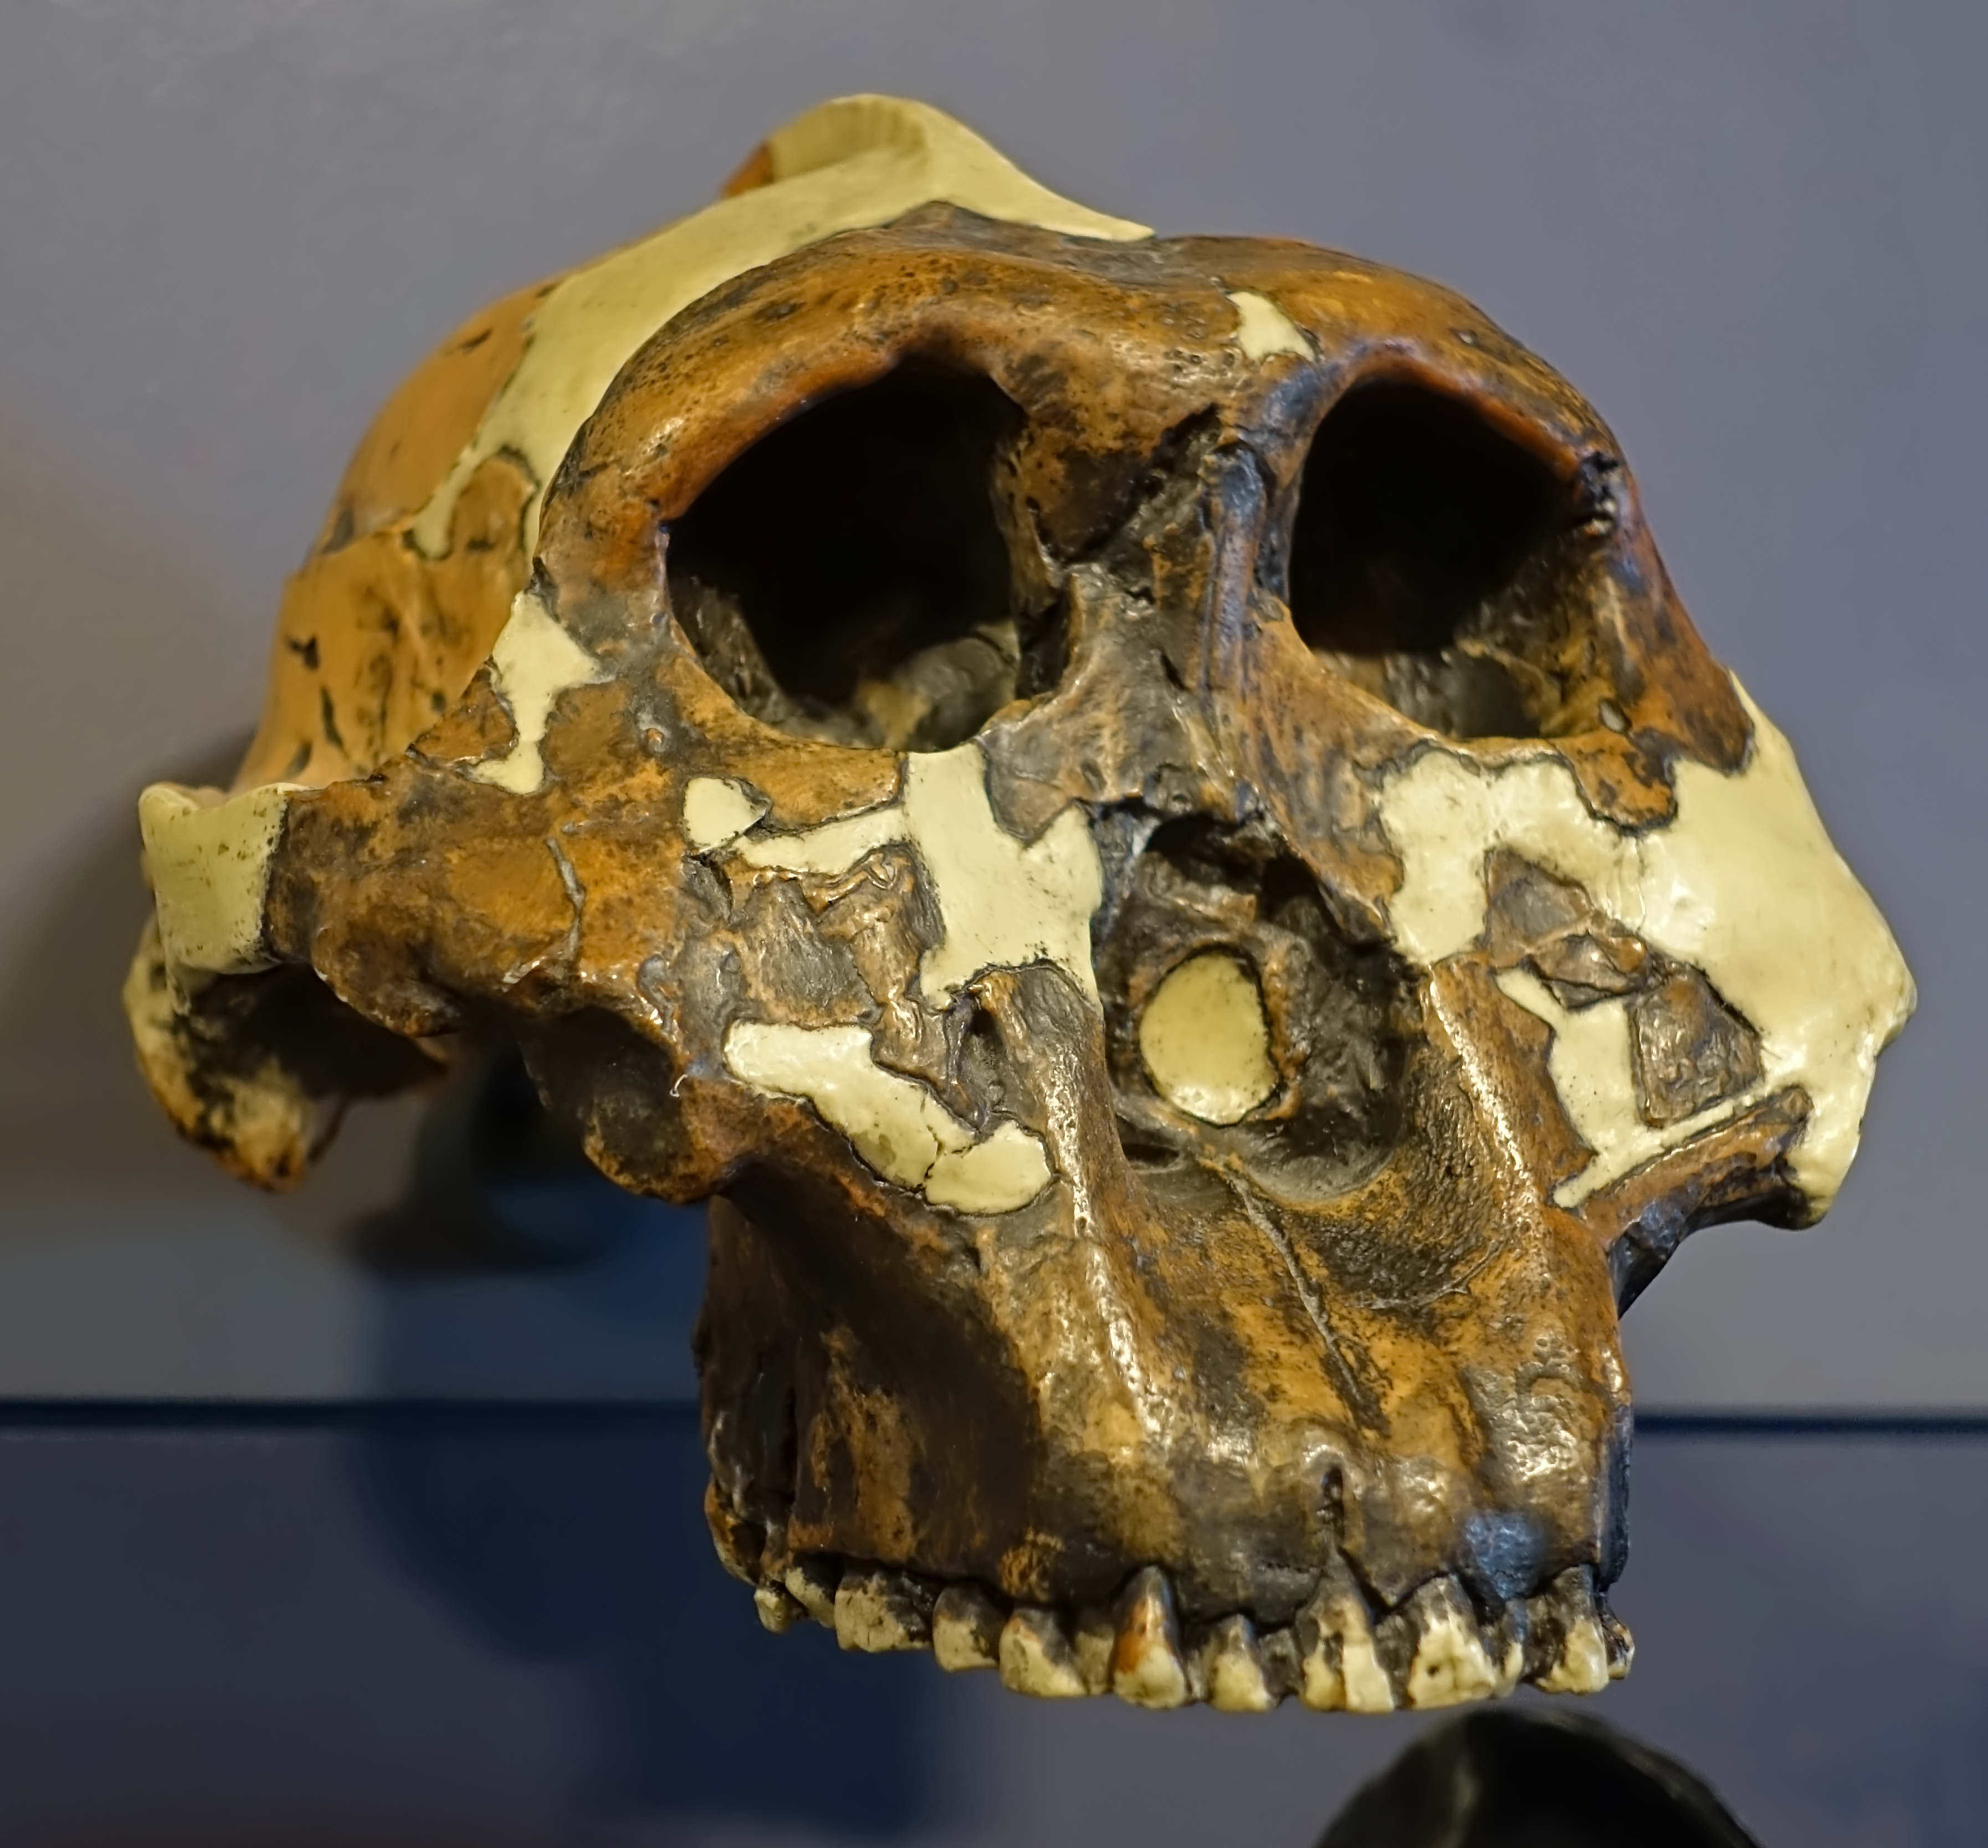 Paranthropus boisei - Nutcracker man